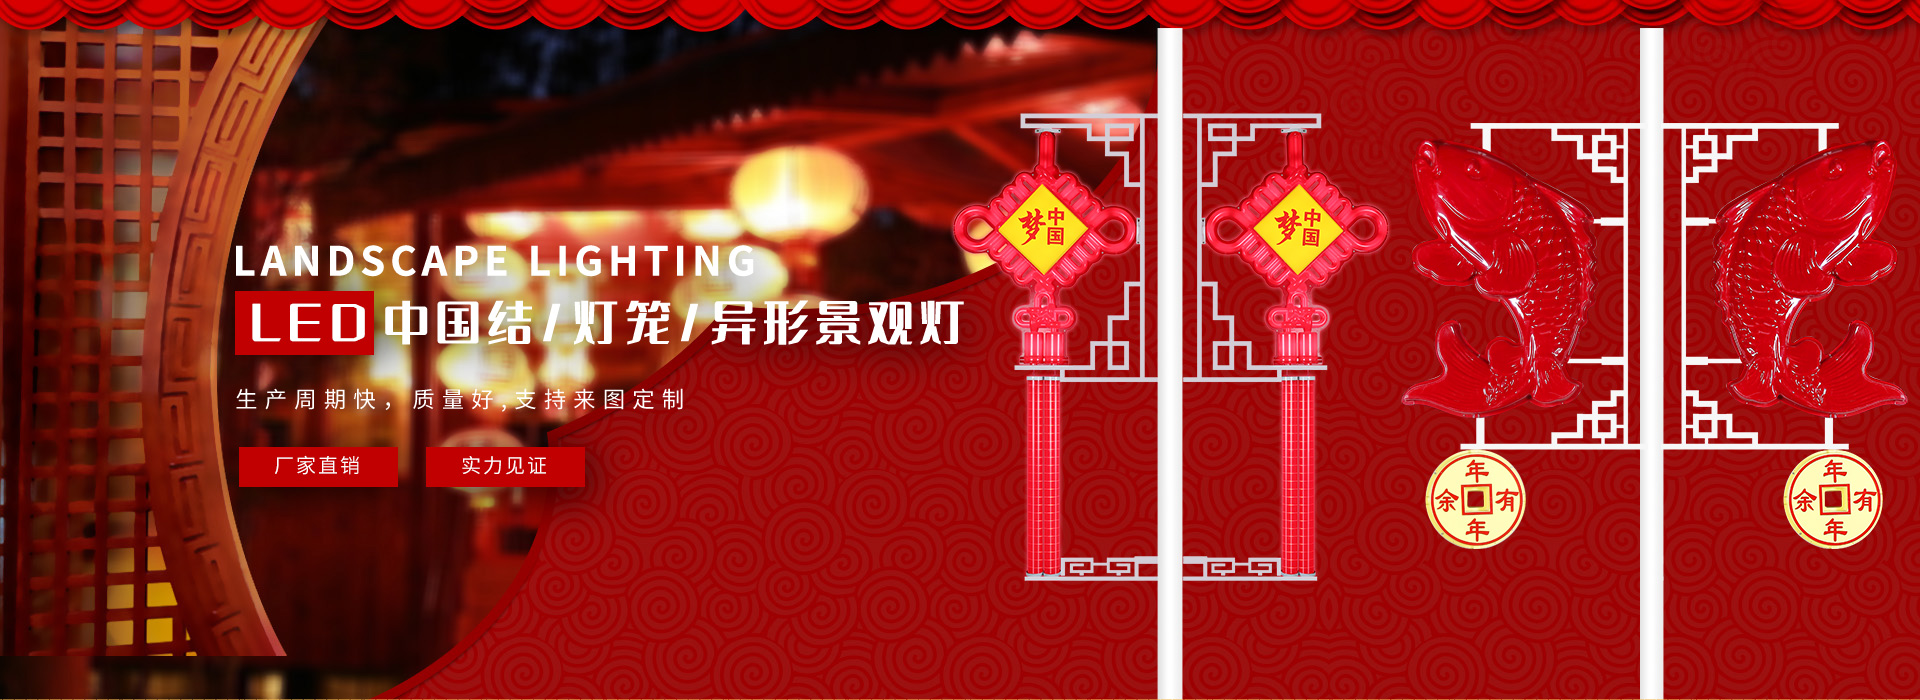 led節日景觀燈,led中國結廠家,led燈籠,led廣告燈箱